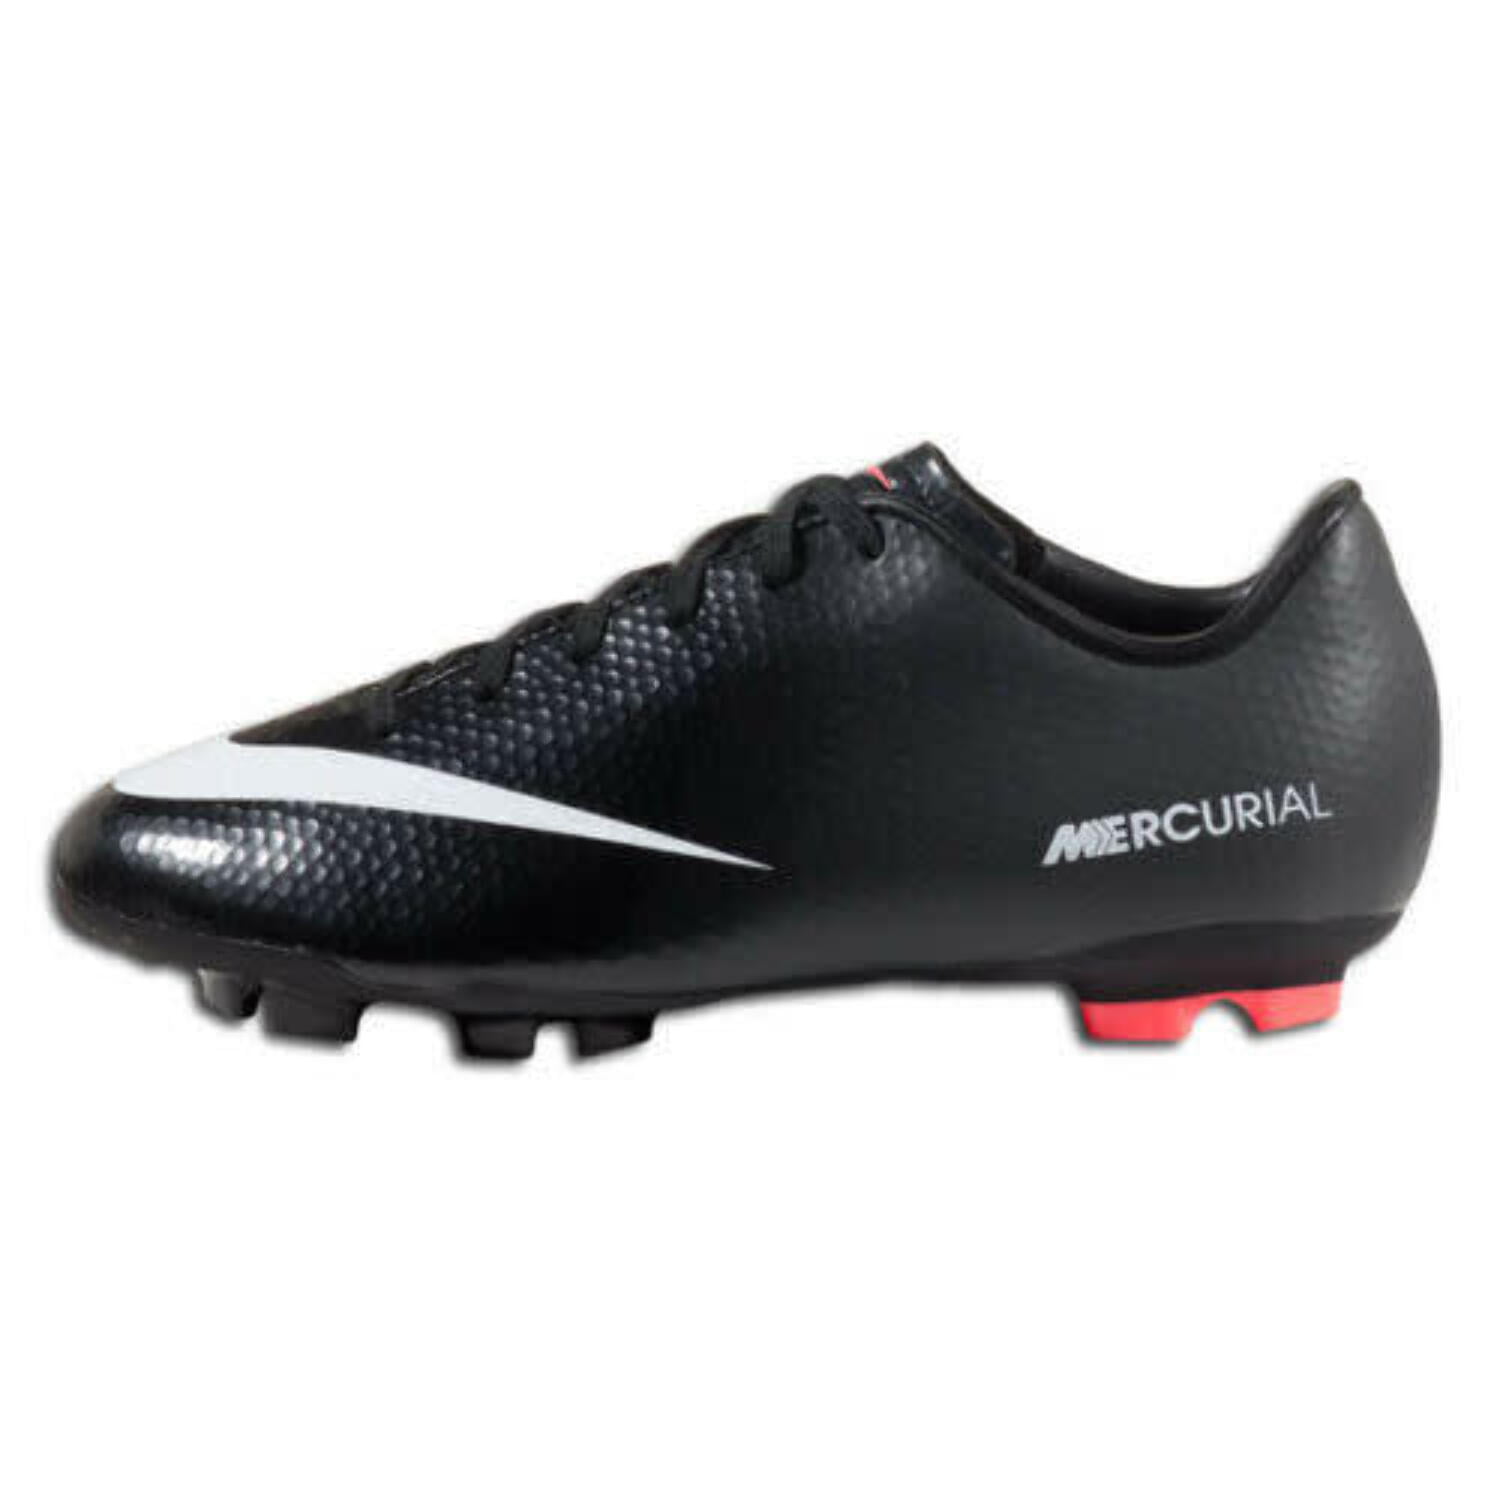 Asalto reducir Desde allí Nike Jr Mercurial Victory IV FG 2013 Soccer Shoes- Black/Red - Walmart.com